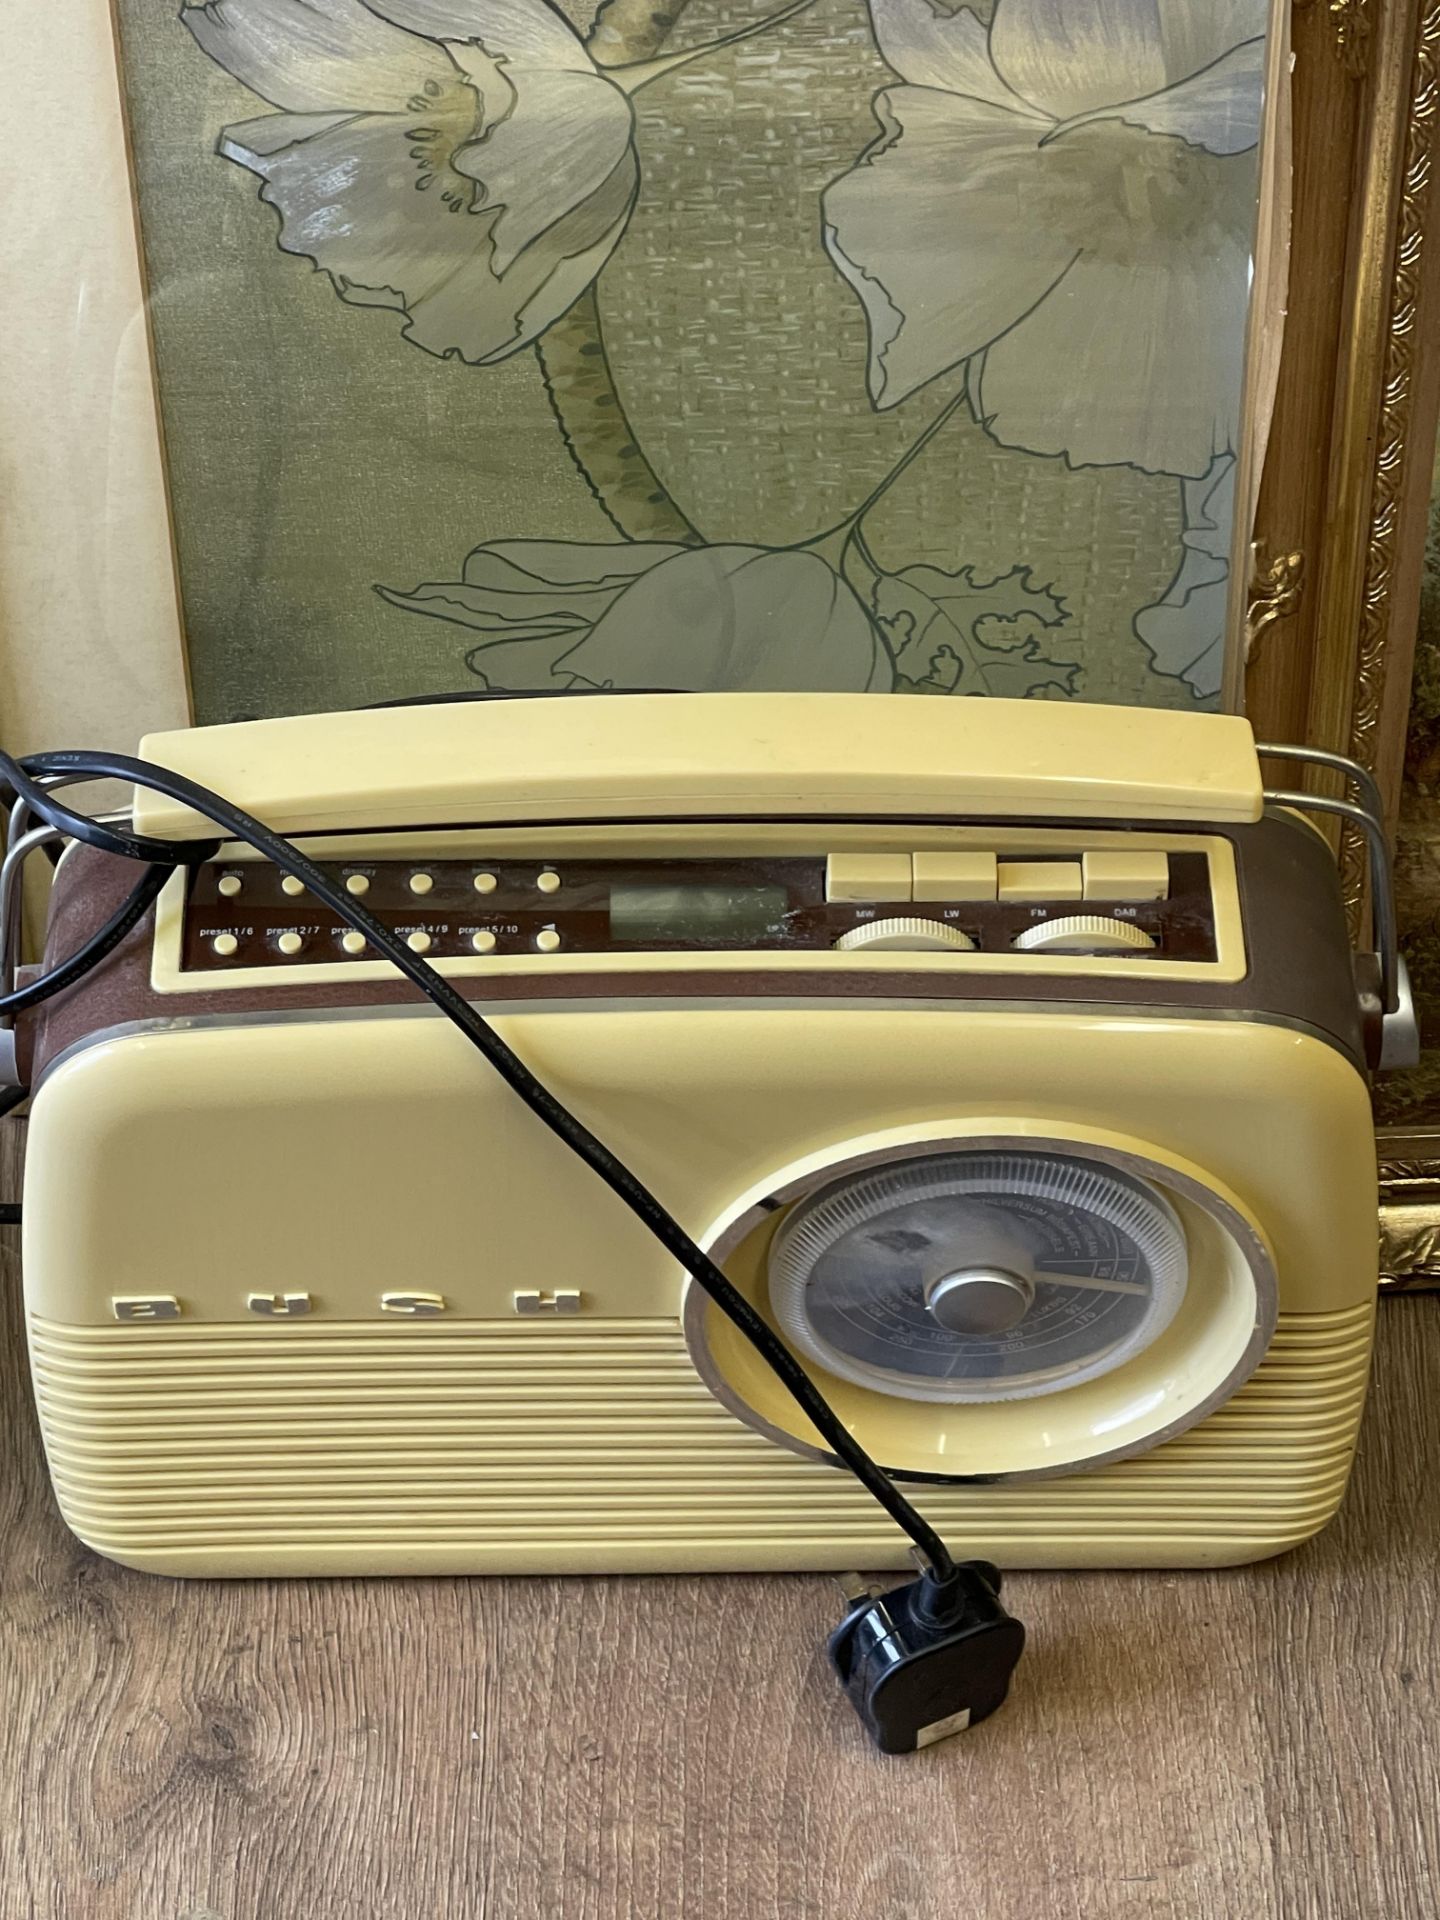 digital radio retro looking very old lost property